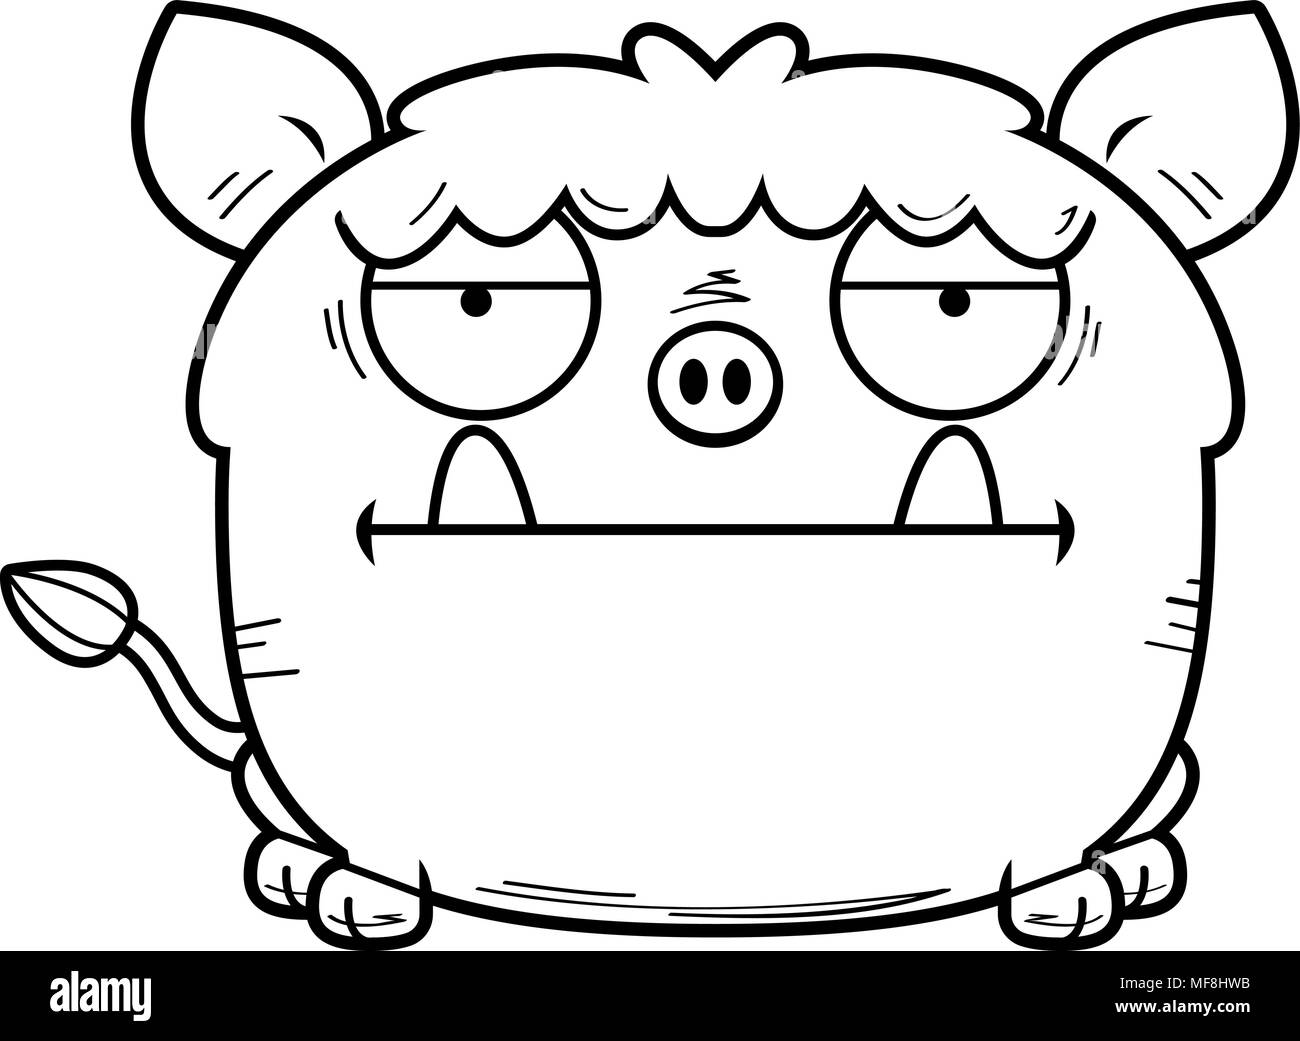 A cartoon illustration of a boar looking bored. Stock Vector